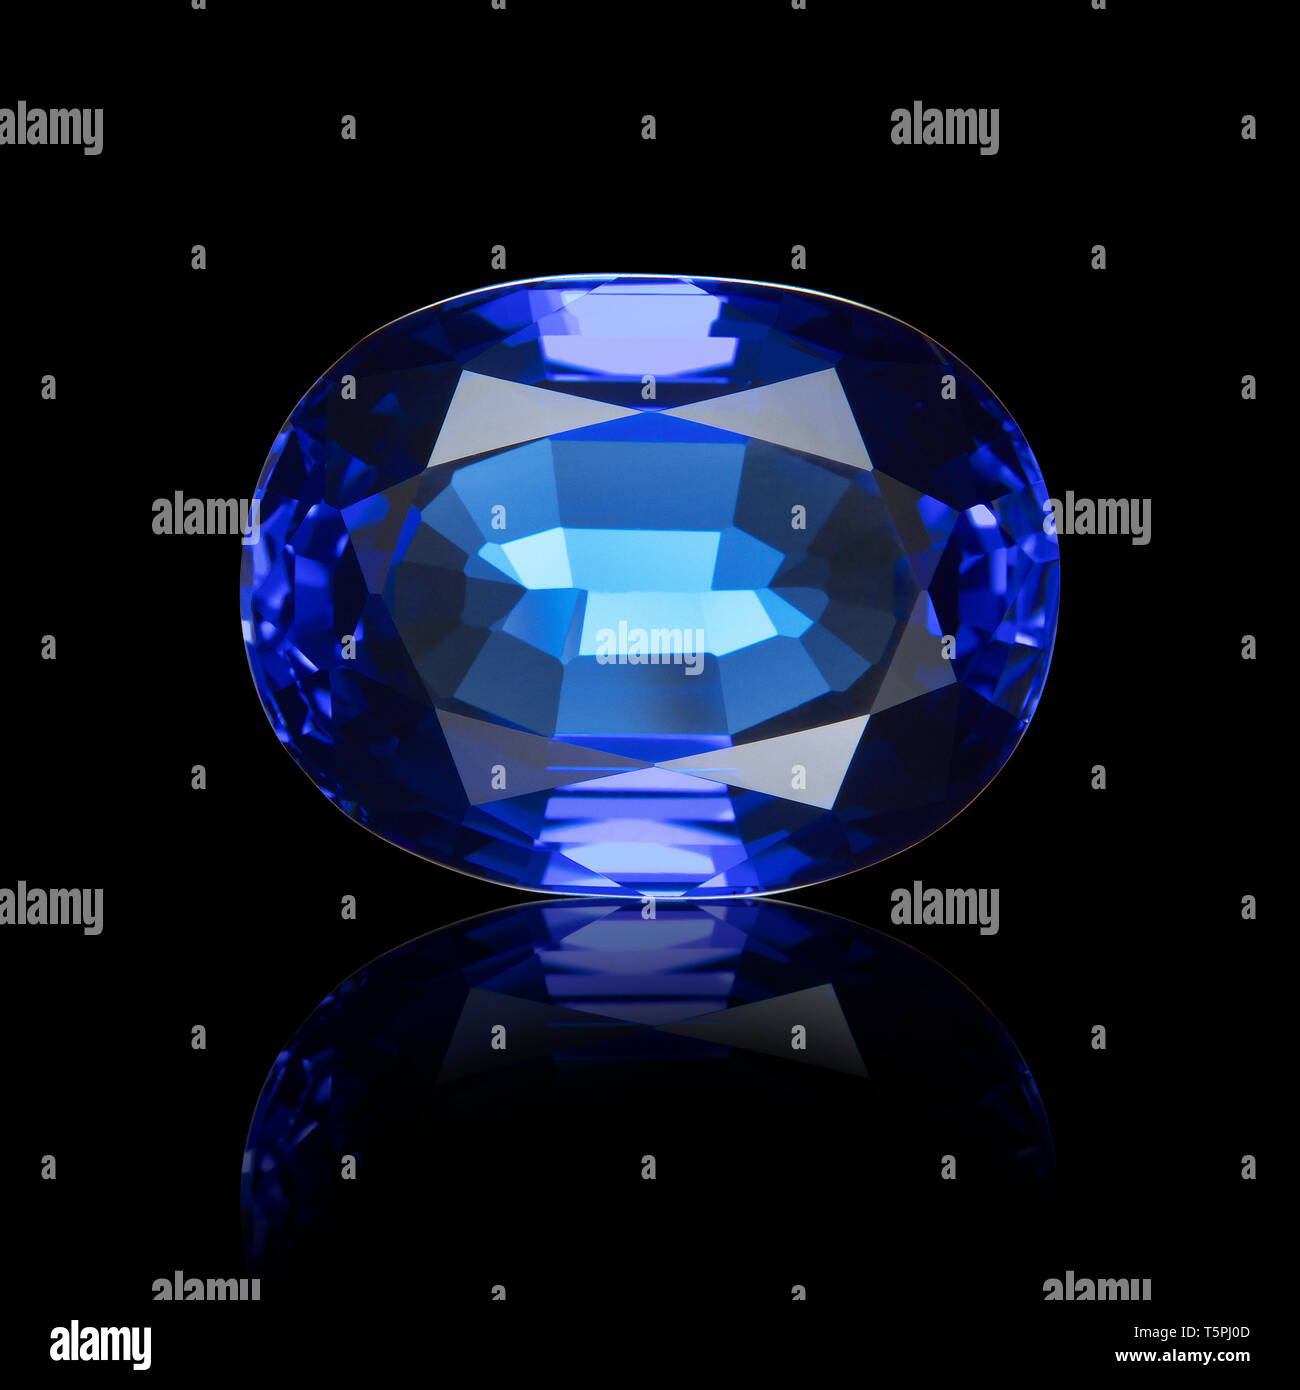 Blue Sapphire, Iolite, Blue Sapphire Gemstone, Iolite Gemstone, Oval cut Gemstone, Oval cut Blue Sapphire Gemstone, Oval Cut Iolite Gemstone Stock Photo